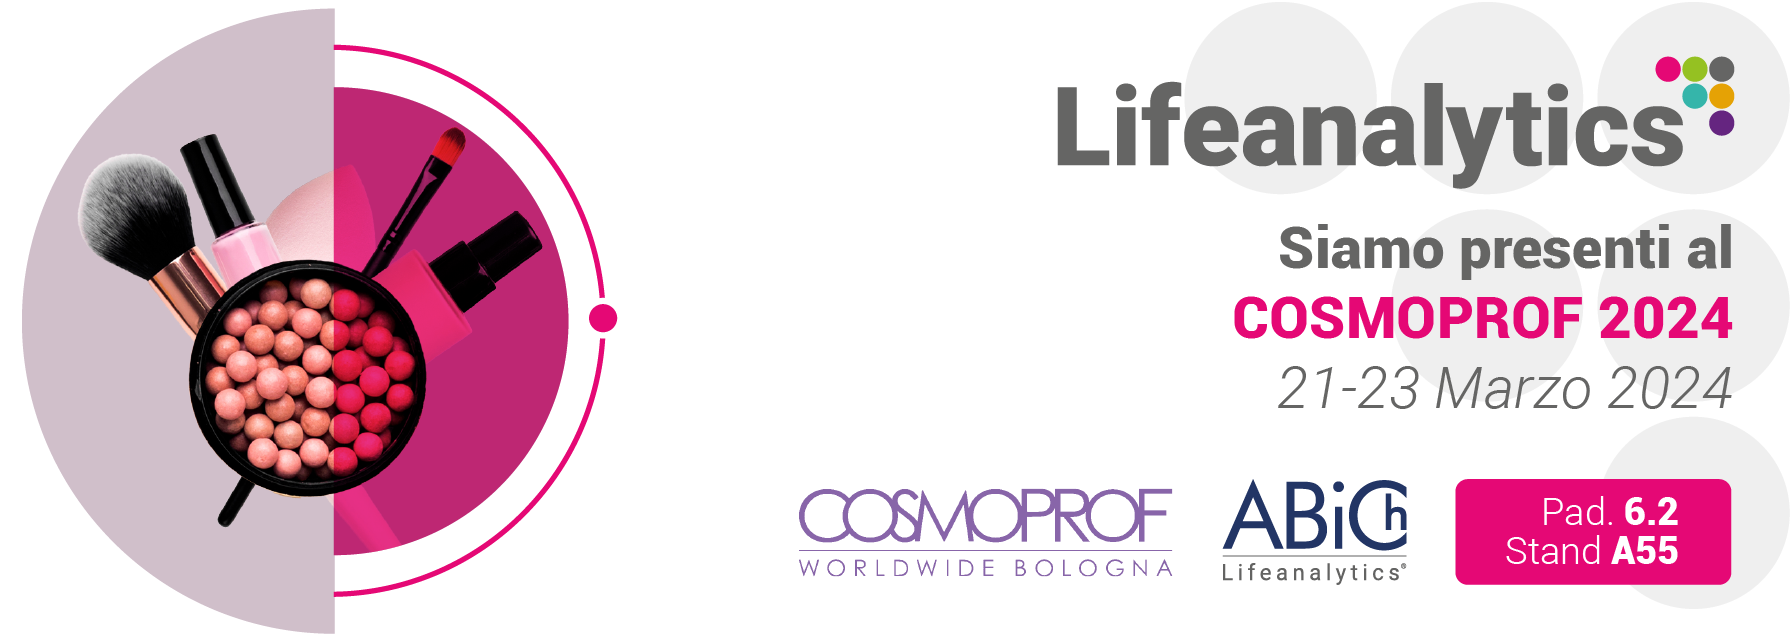 Cosmoprof Lifeanalytics